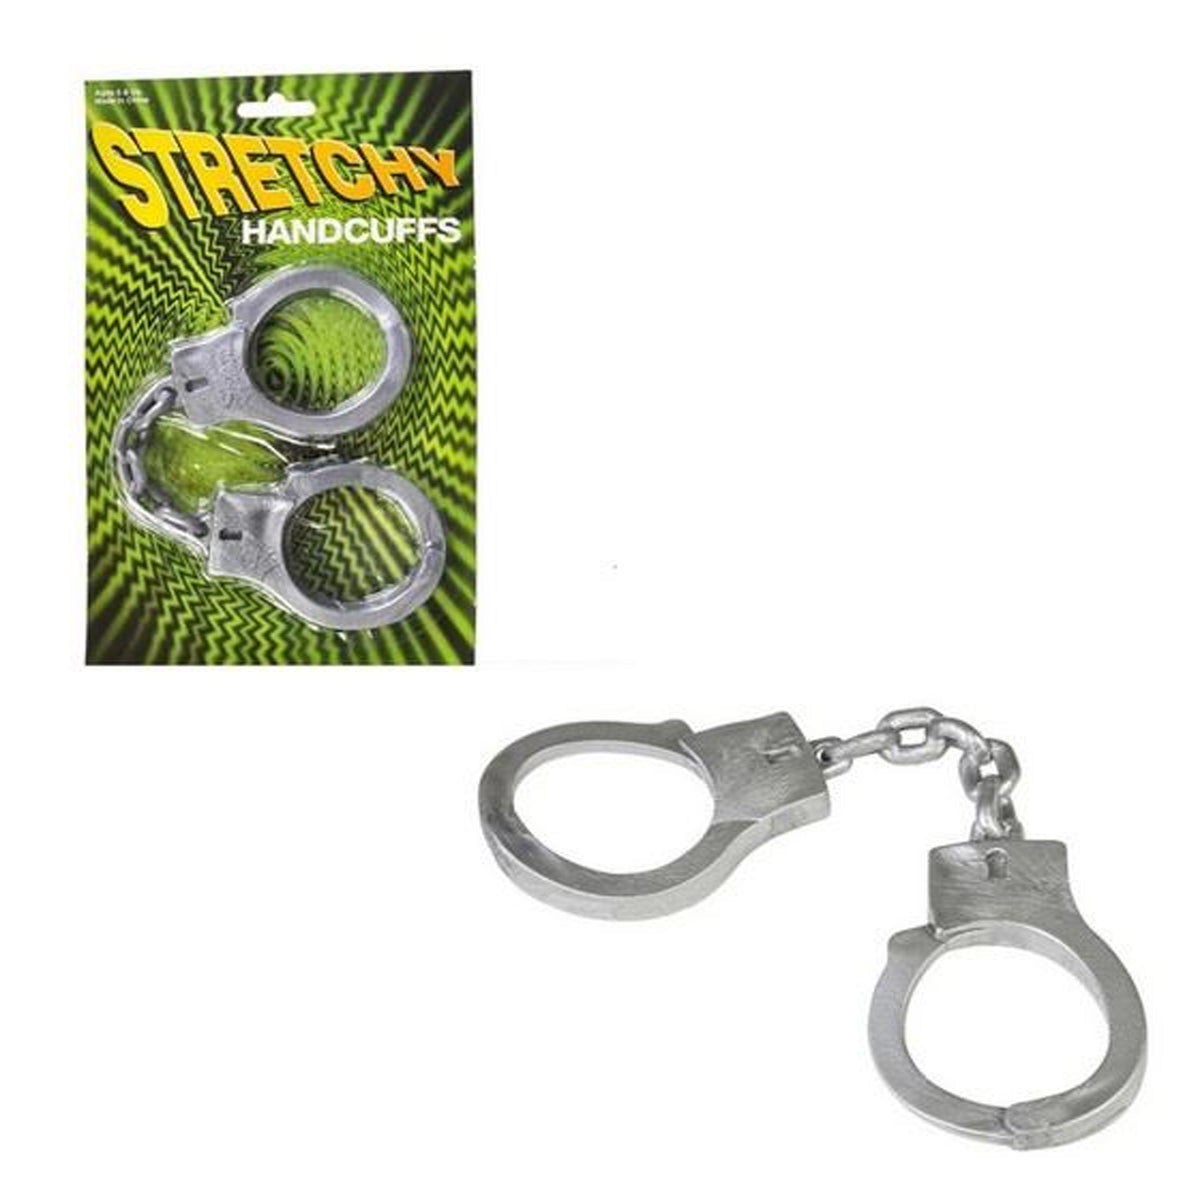 Stretchy Elastic Handcuffs kids Toys In Bulk